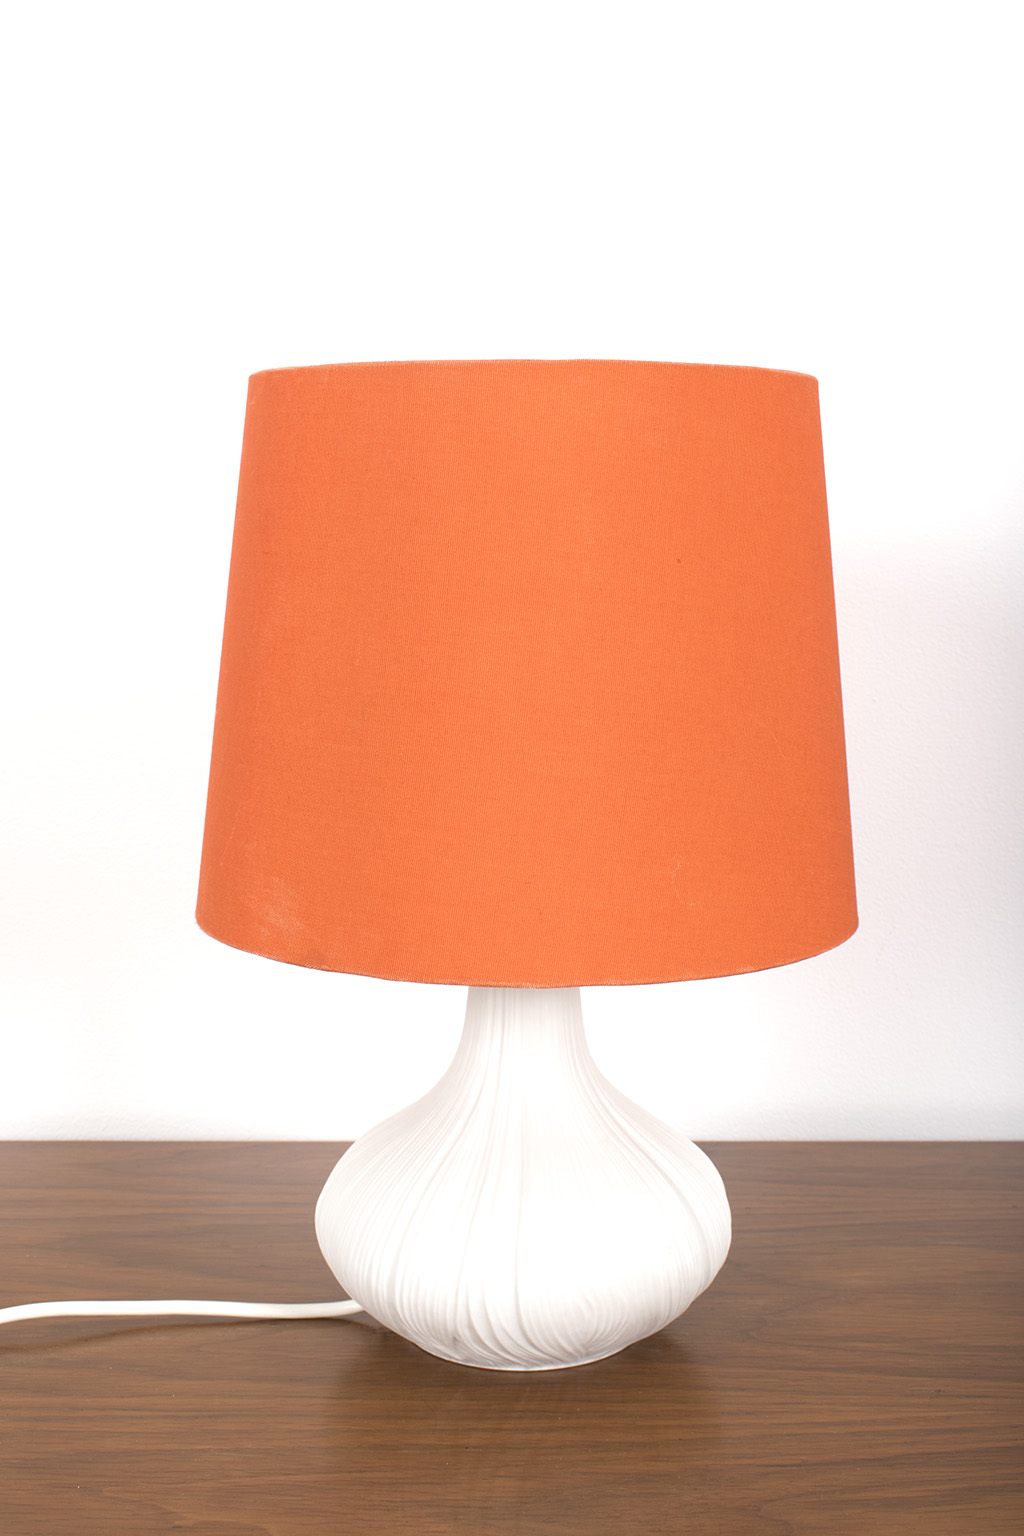 Rosenthal table lamp